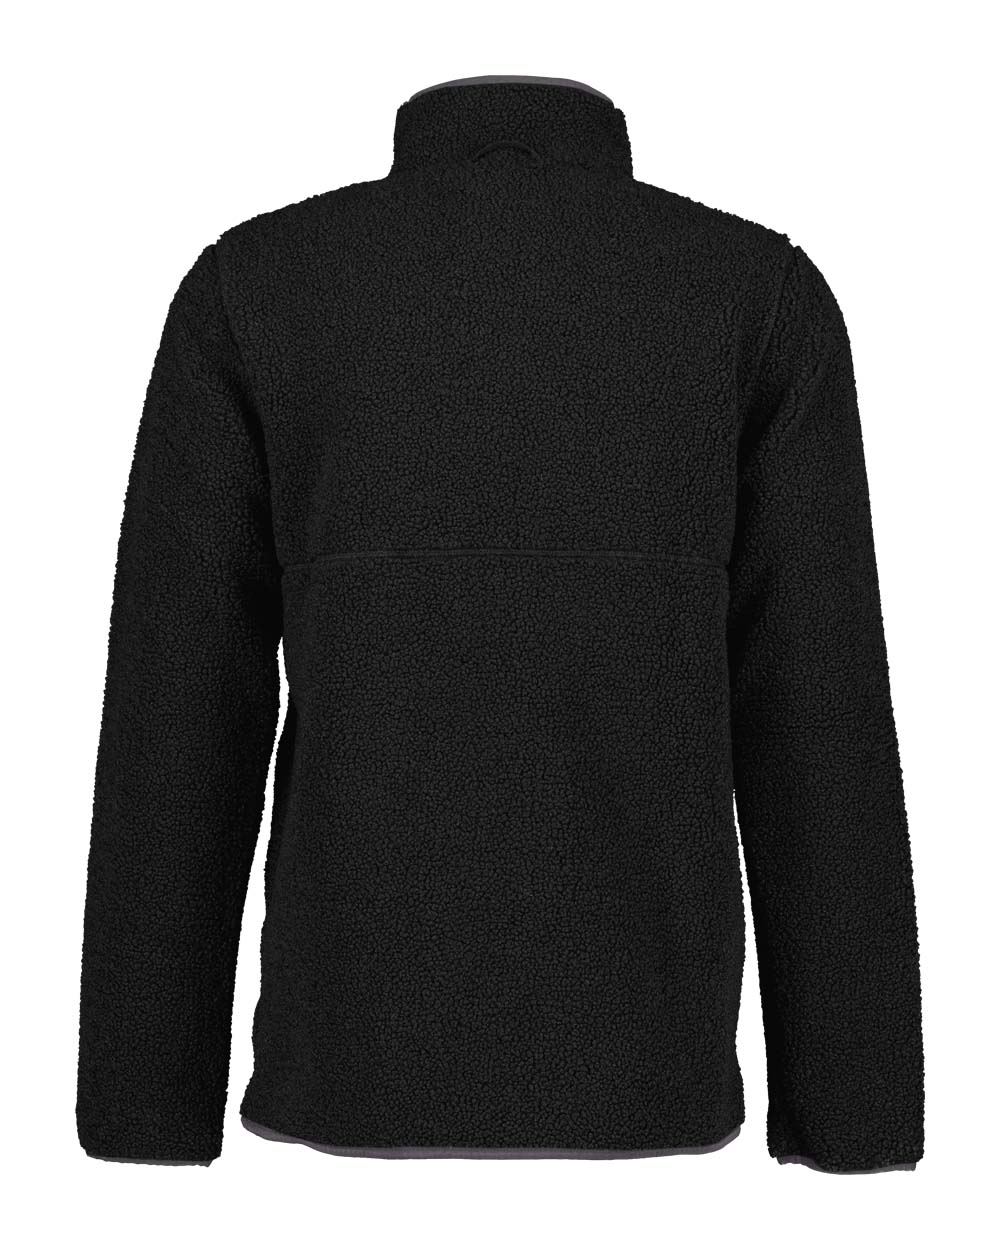 Black coloured Didriksons Full-Zip Jacket on White background 